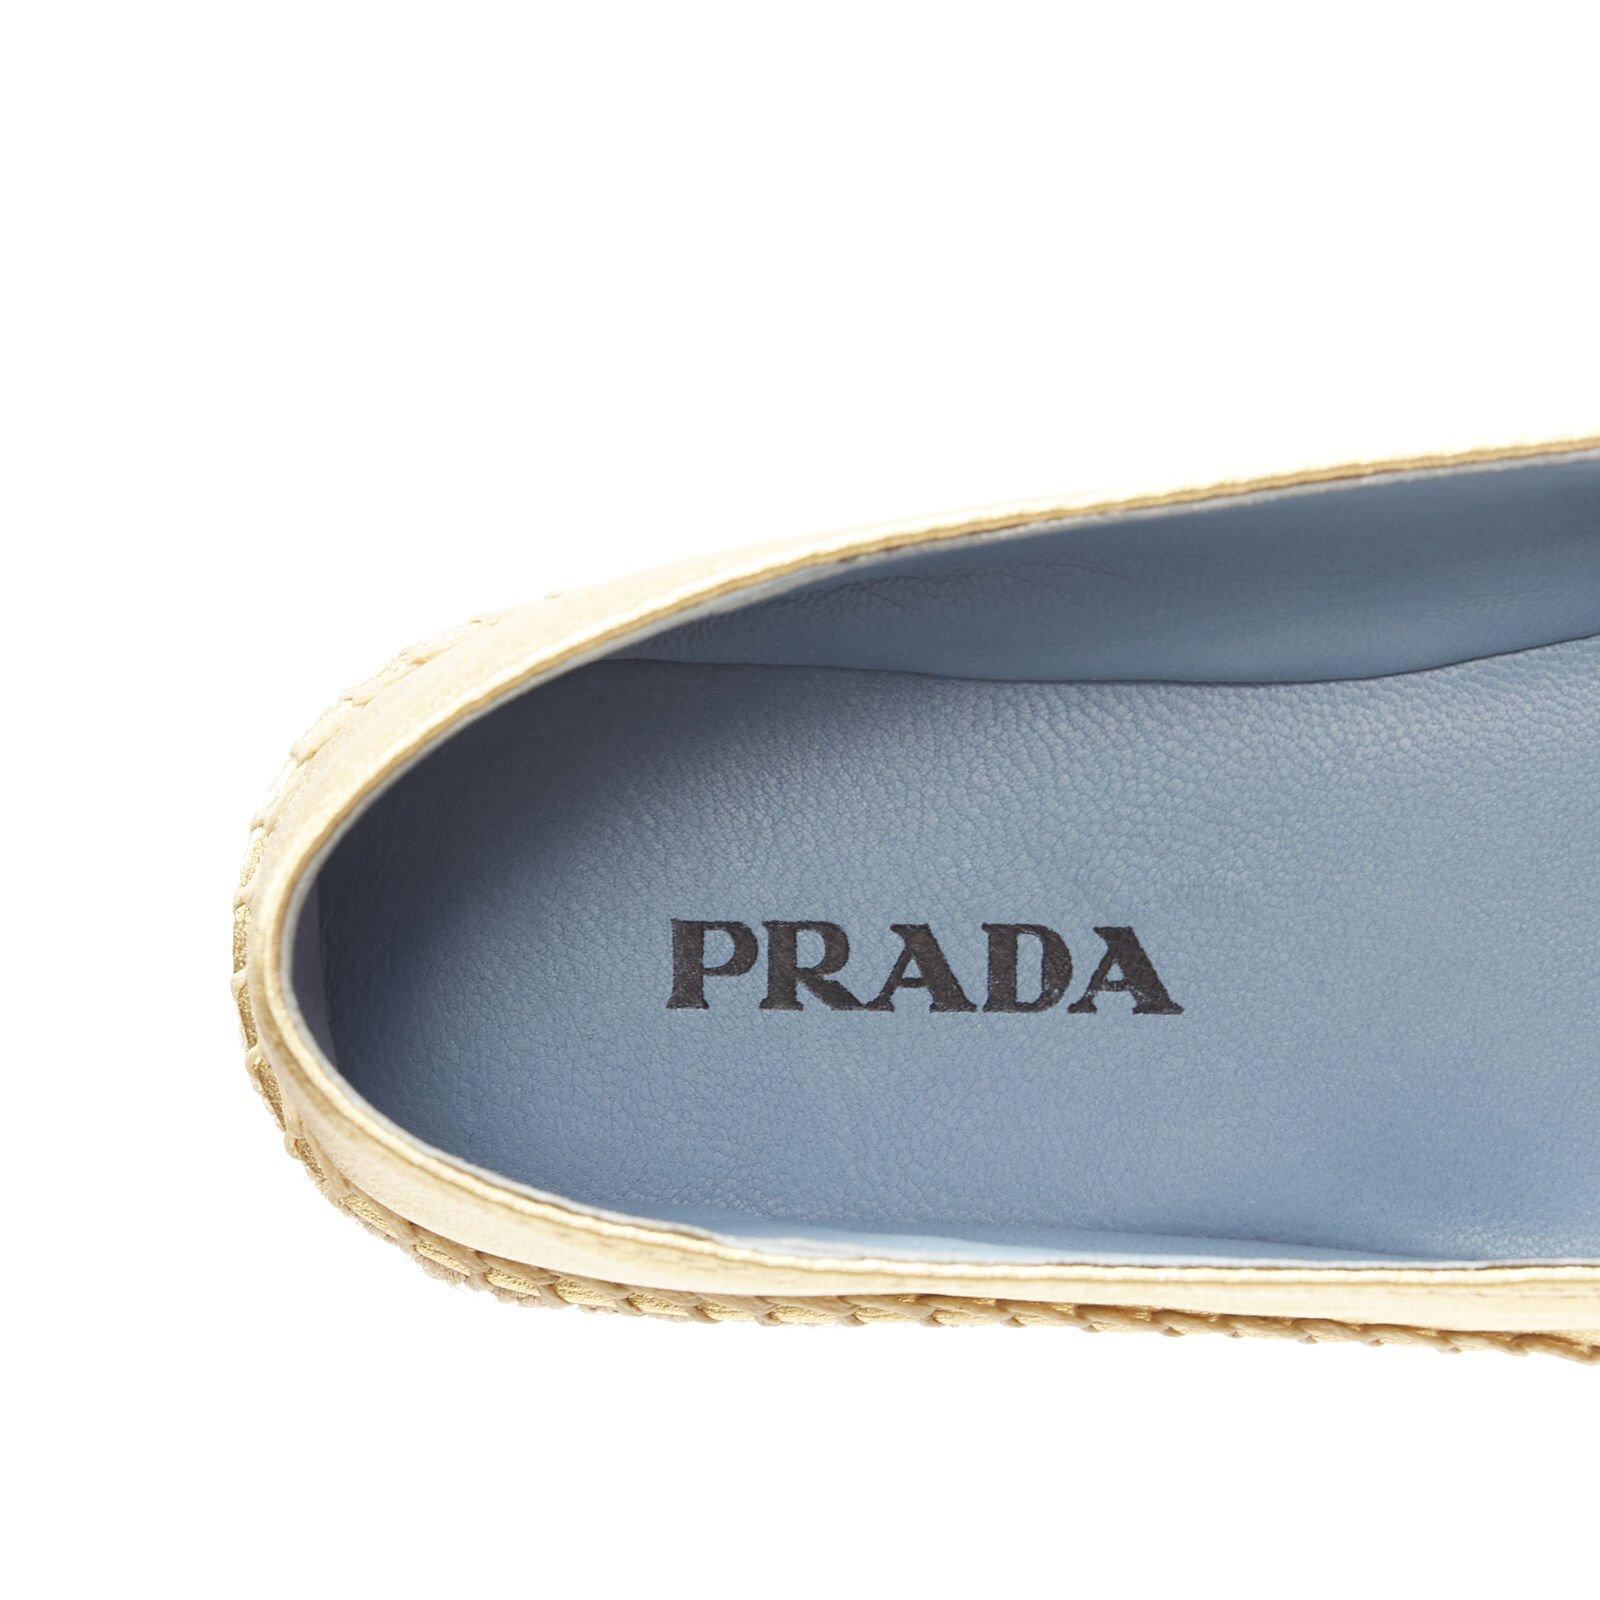 PRADA metallic gold leather logo peep toe jute platform espadrille shoe EU38 6